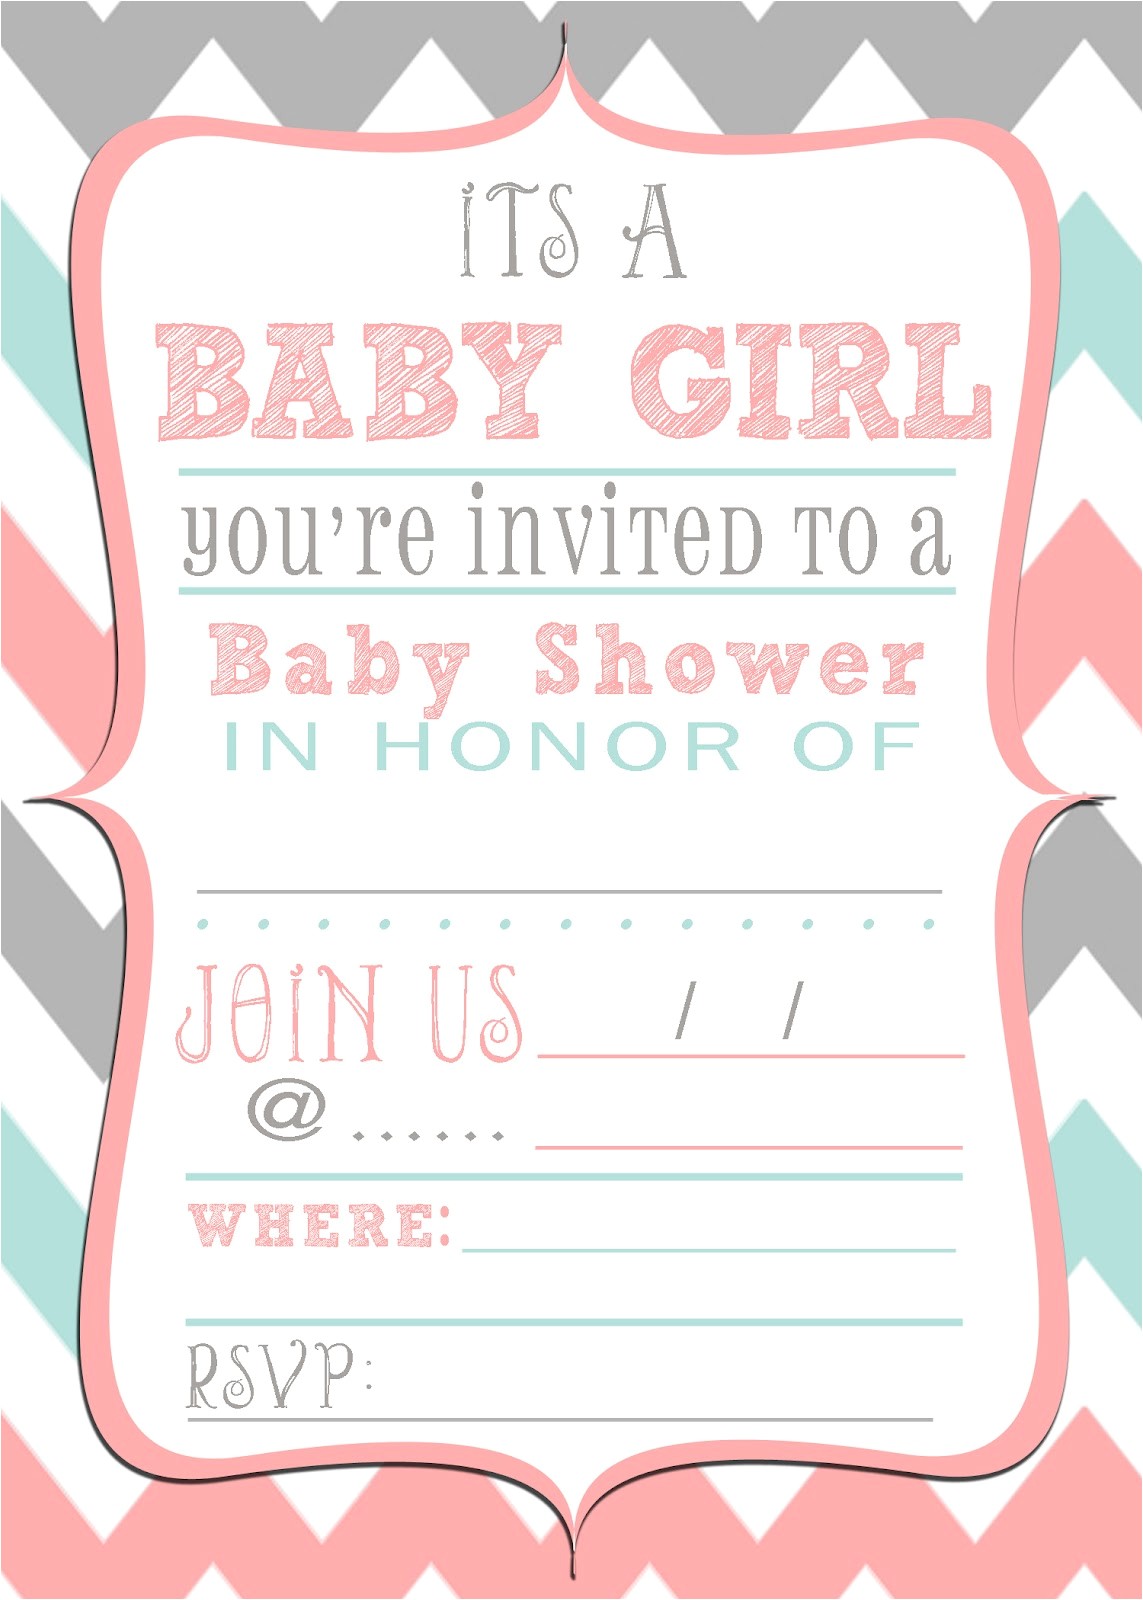 baby shower banner free s yipee